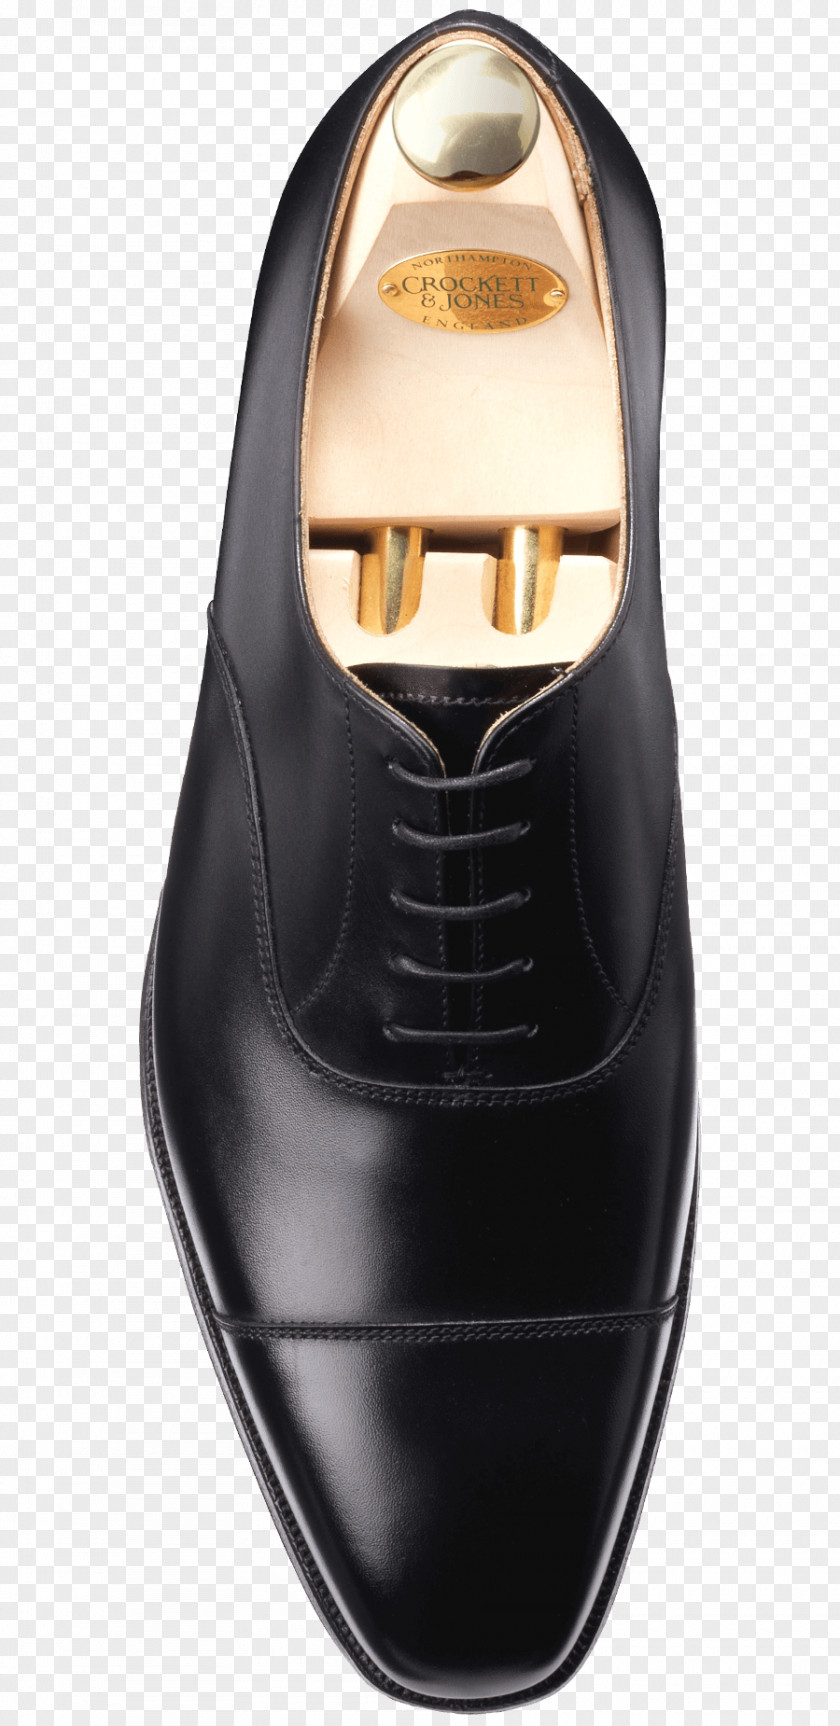 England Tidal Shoes Slip-on Shoe Dress Oxford Crockett & Jones PNG